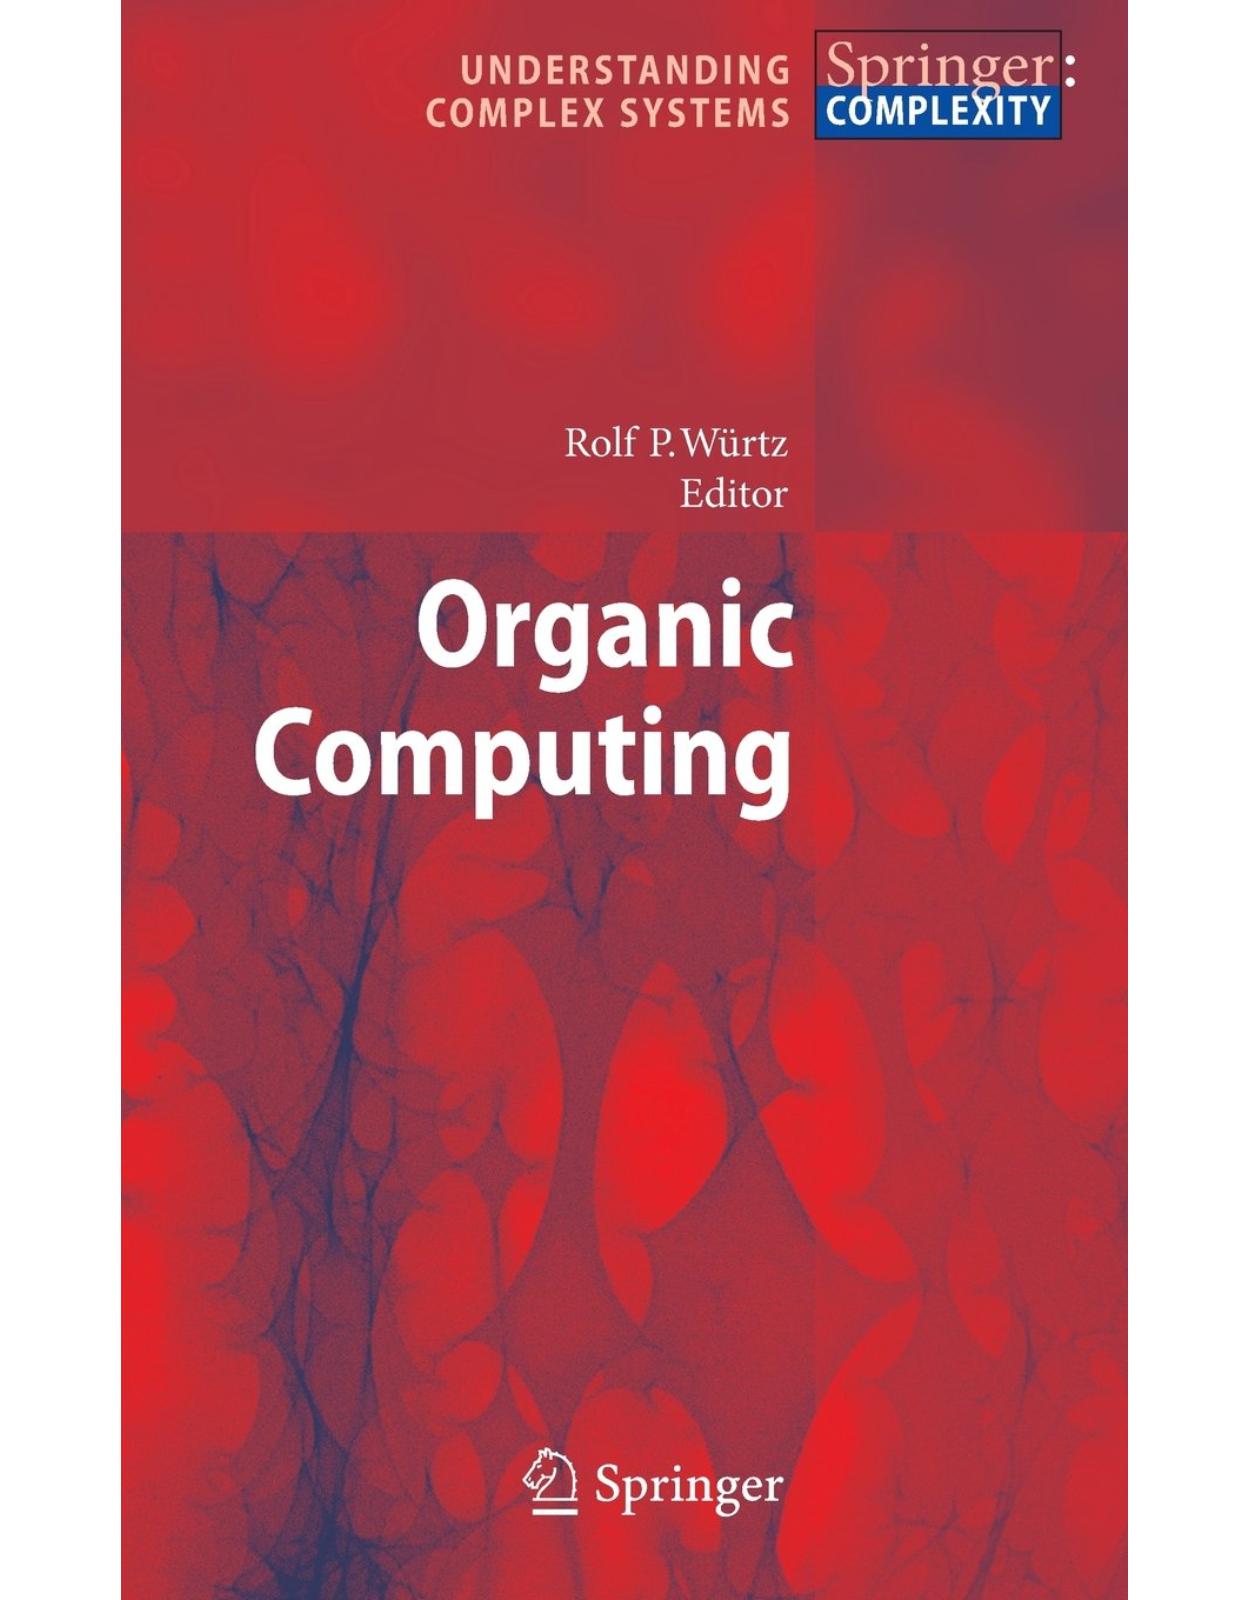 Organic Computing (Understanding Complex Systems)